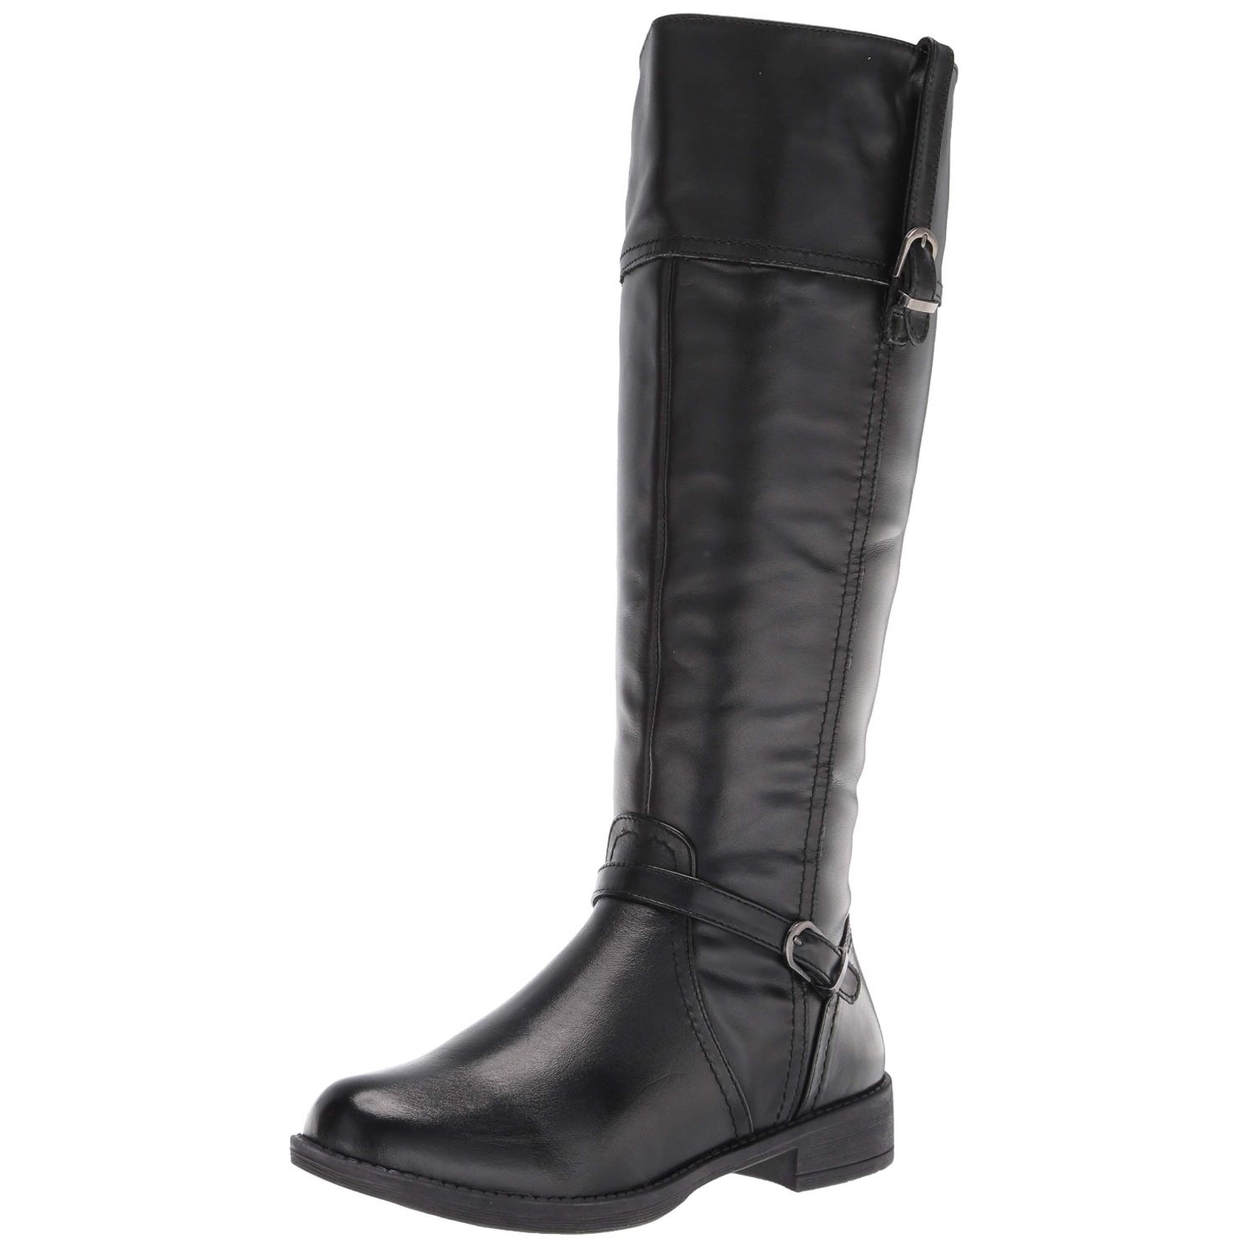 Propet Womens Tasha Zippered Casual Boots Knee High Low Heel 1-2 - Black BROWN - BROWN, 9.5 X-Wide